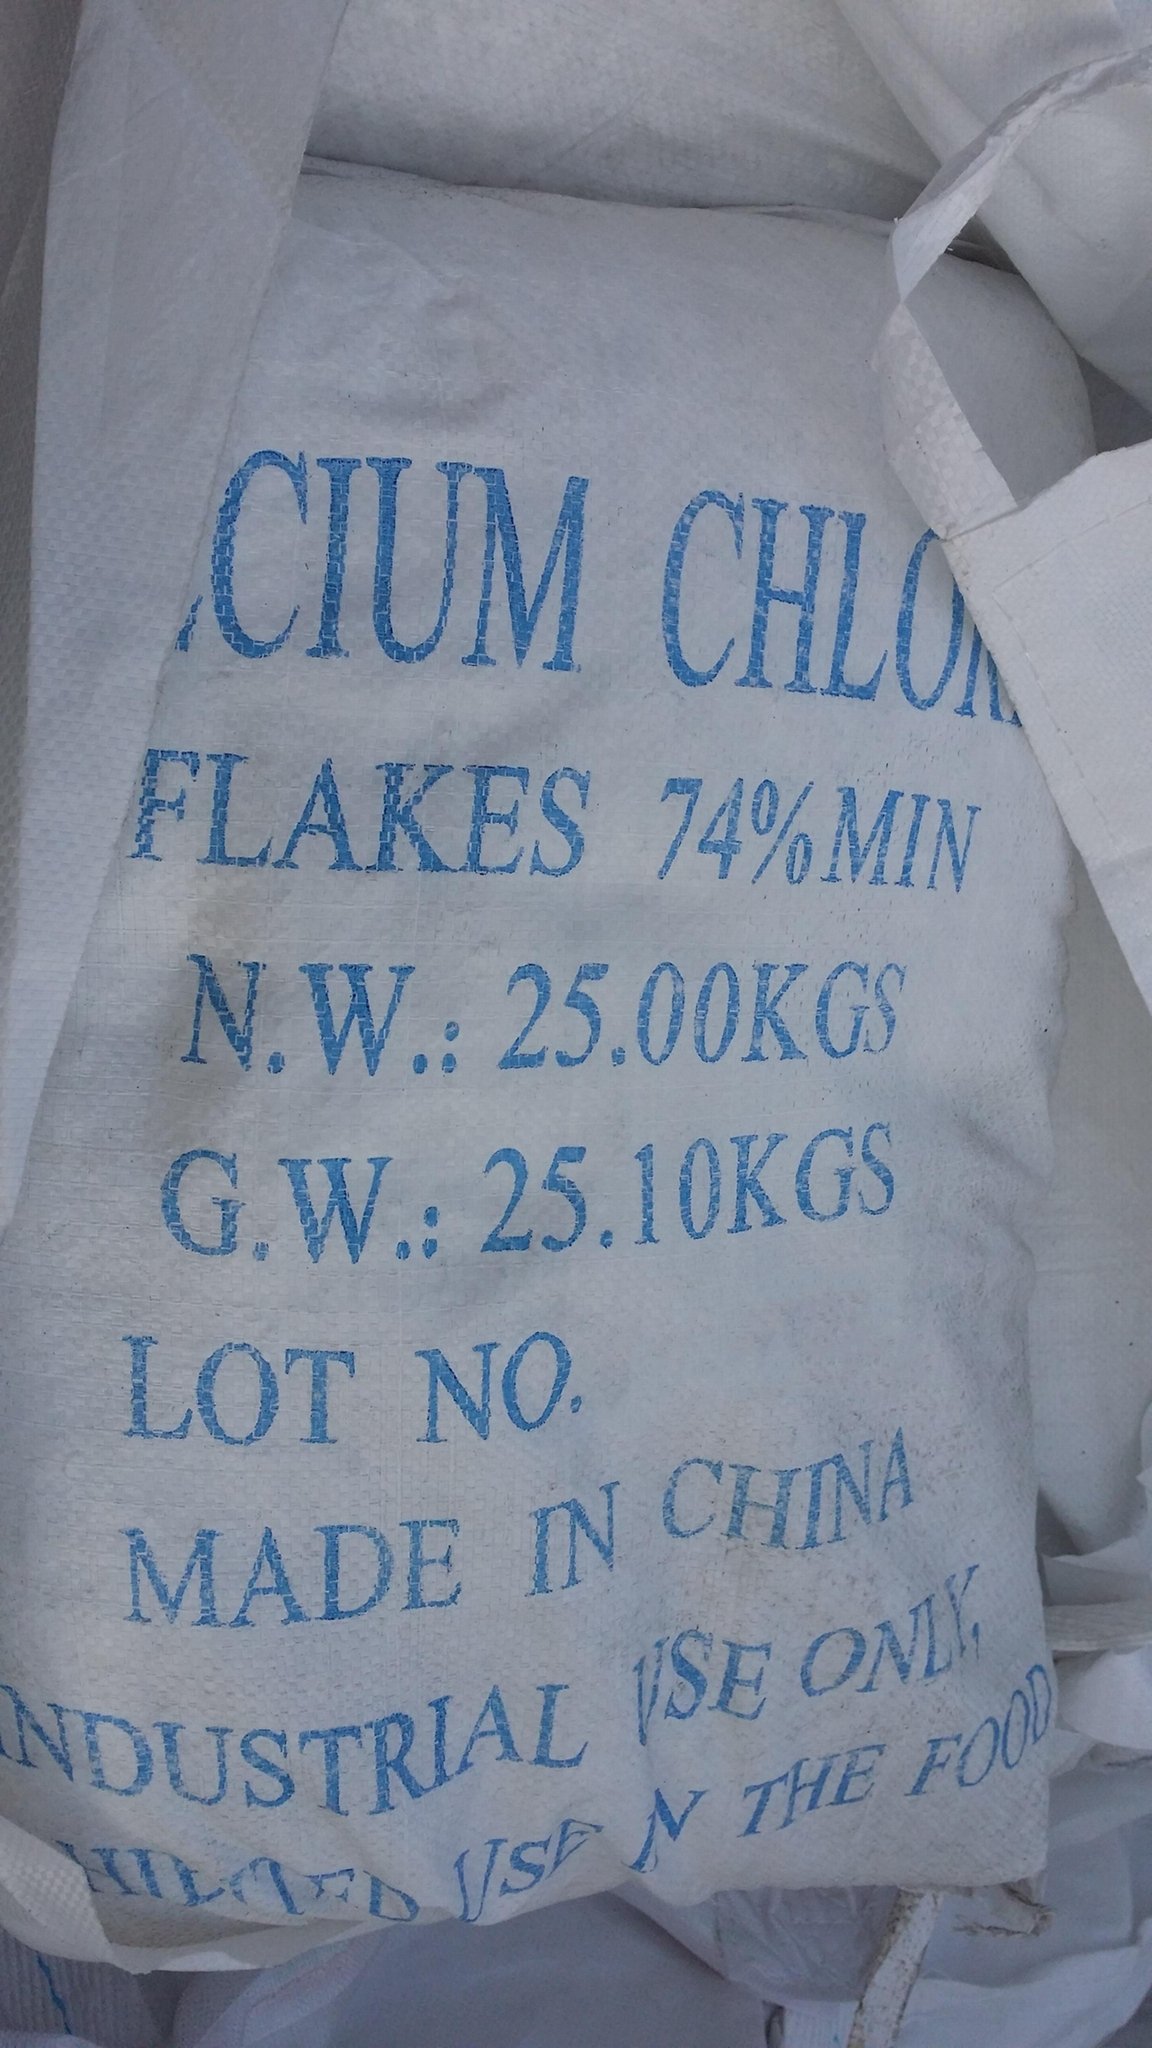 calcium chloride 74%-77%min flakes 4